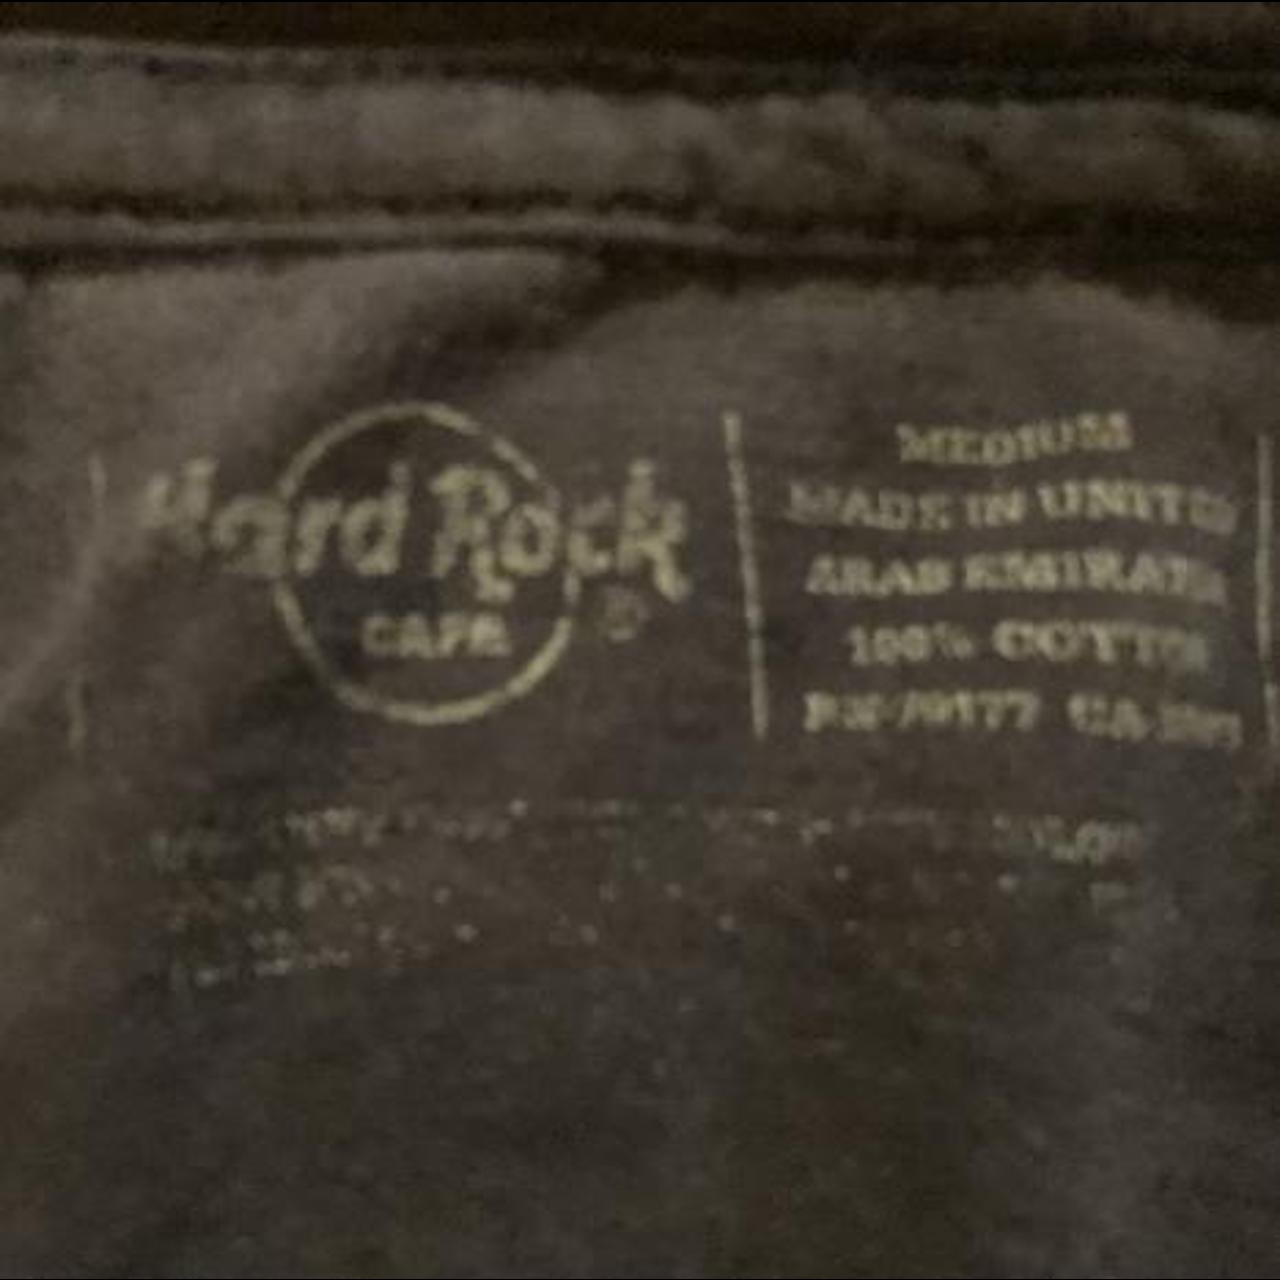 Hard Rock Cafe shirt 🎸 #shirt #rock #music... - Depop